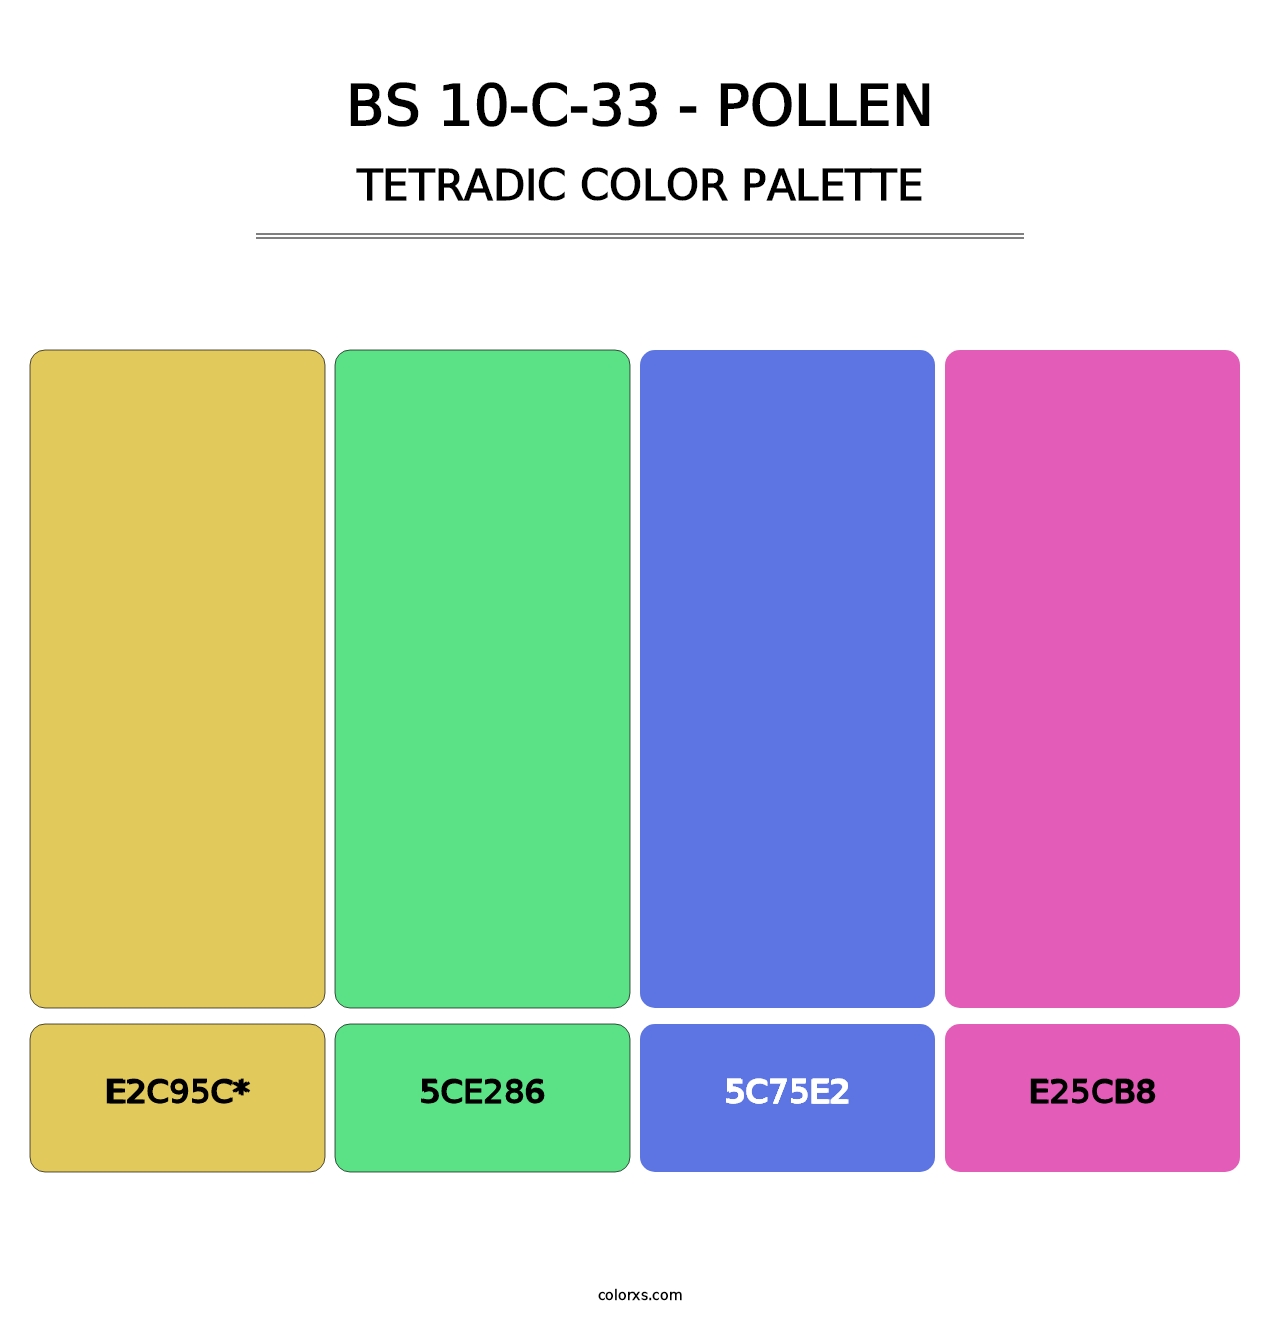 BS 10-C-33 - Pollen - Tetradic Color Palette